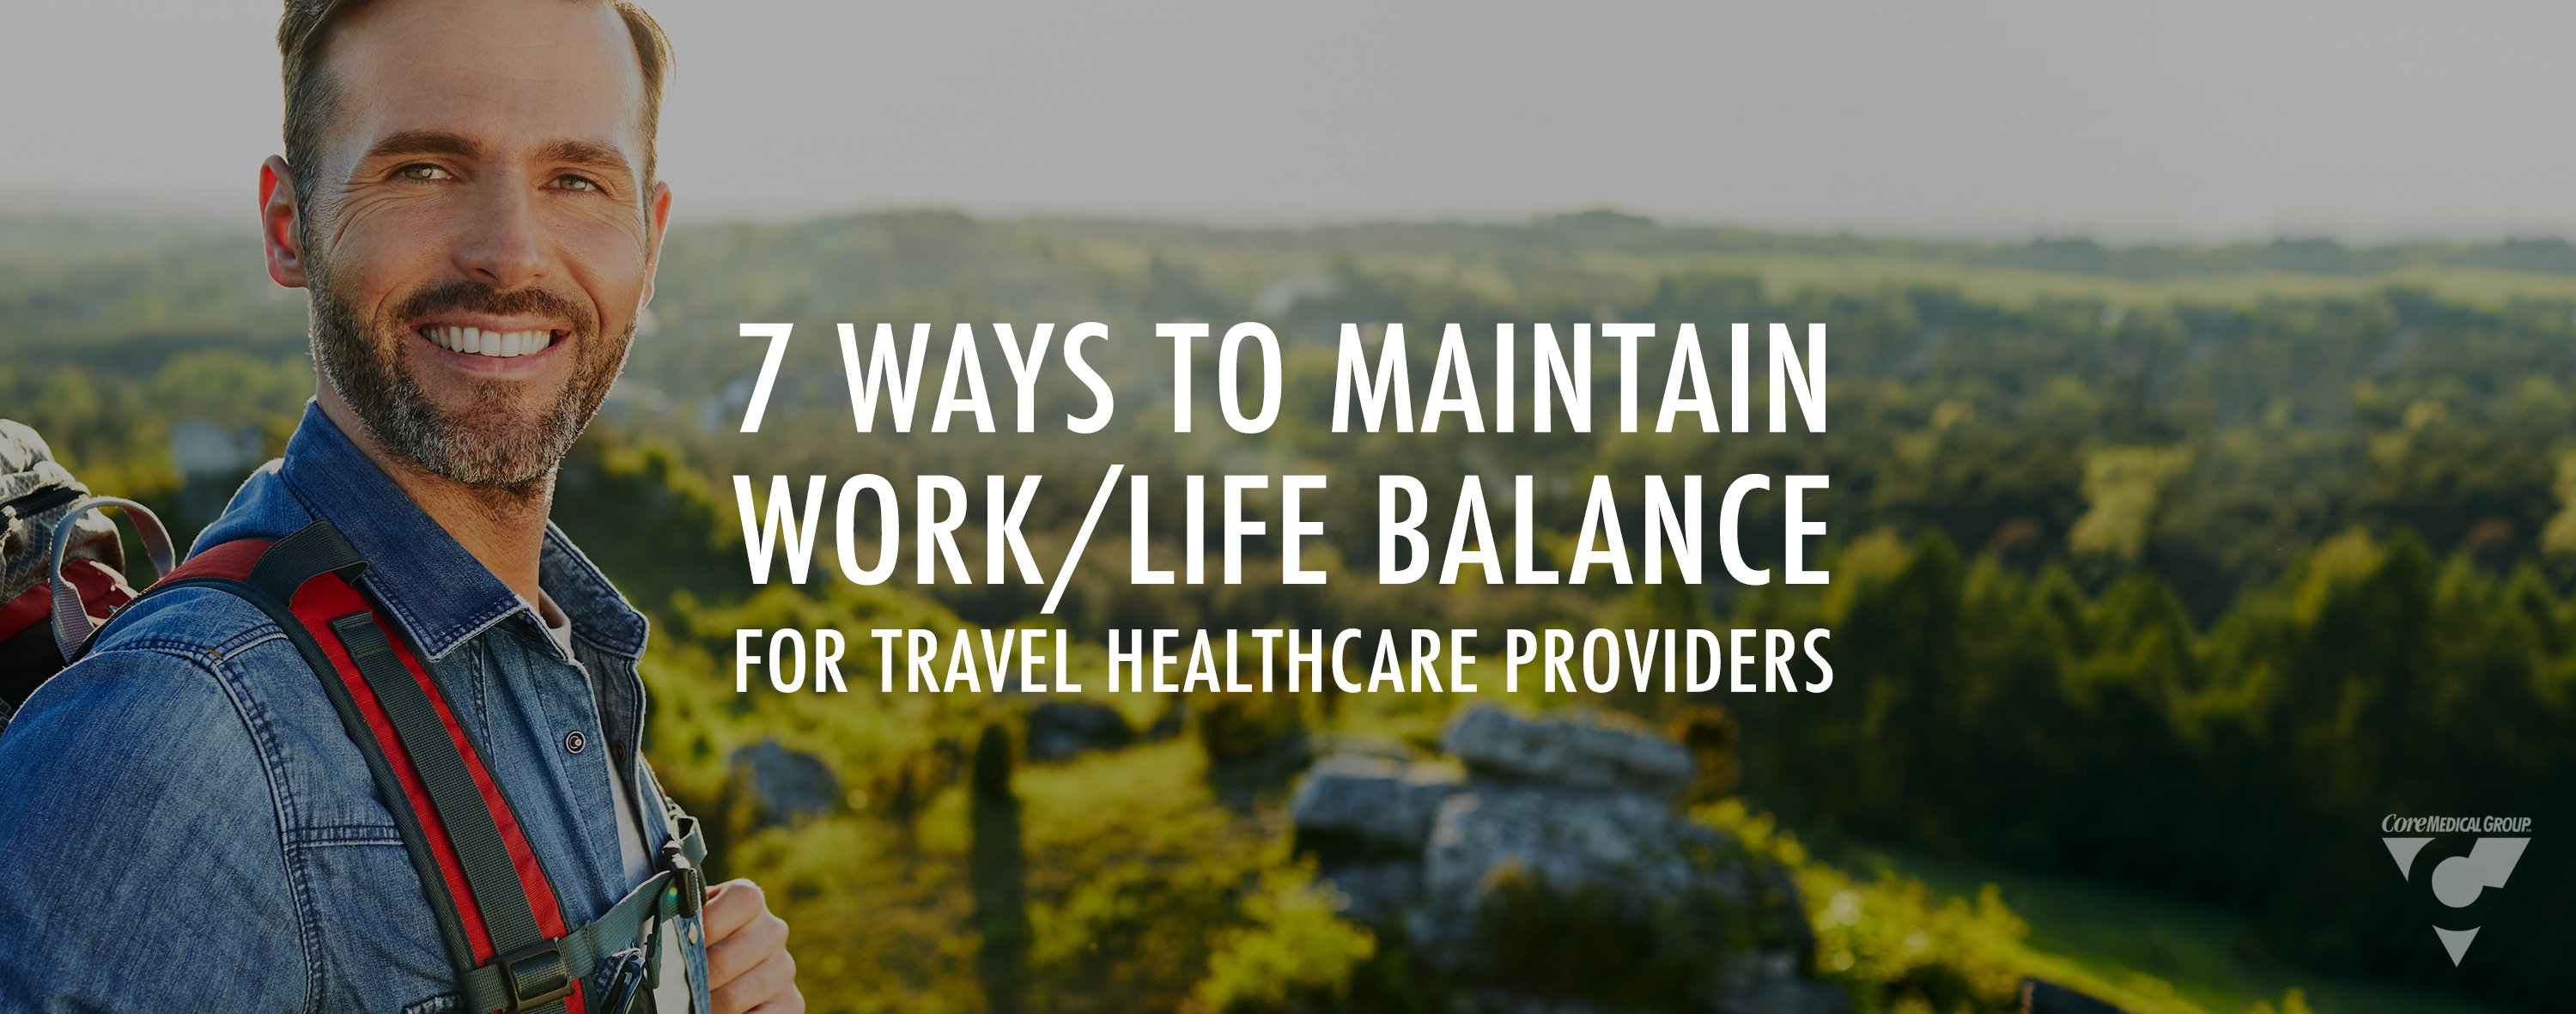 7 ways to maintain work life balance for travel healthcare providers travel nurses